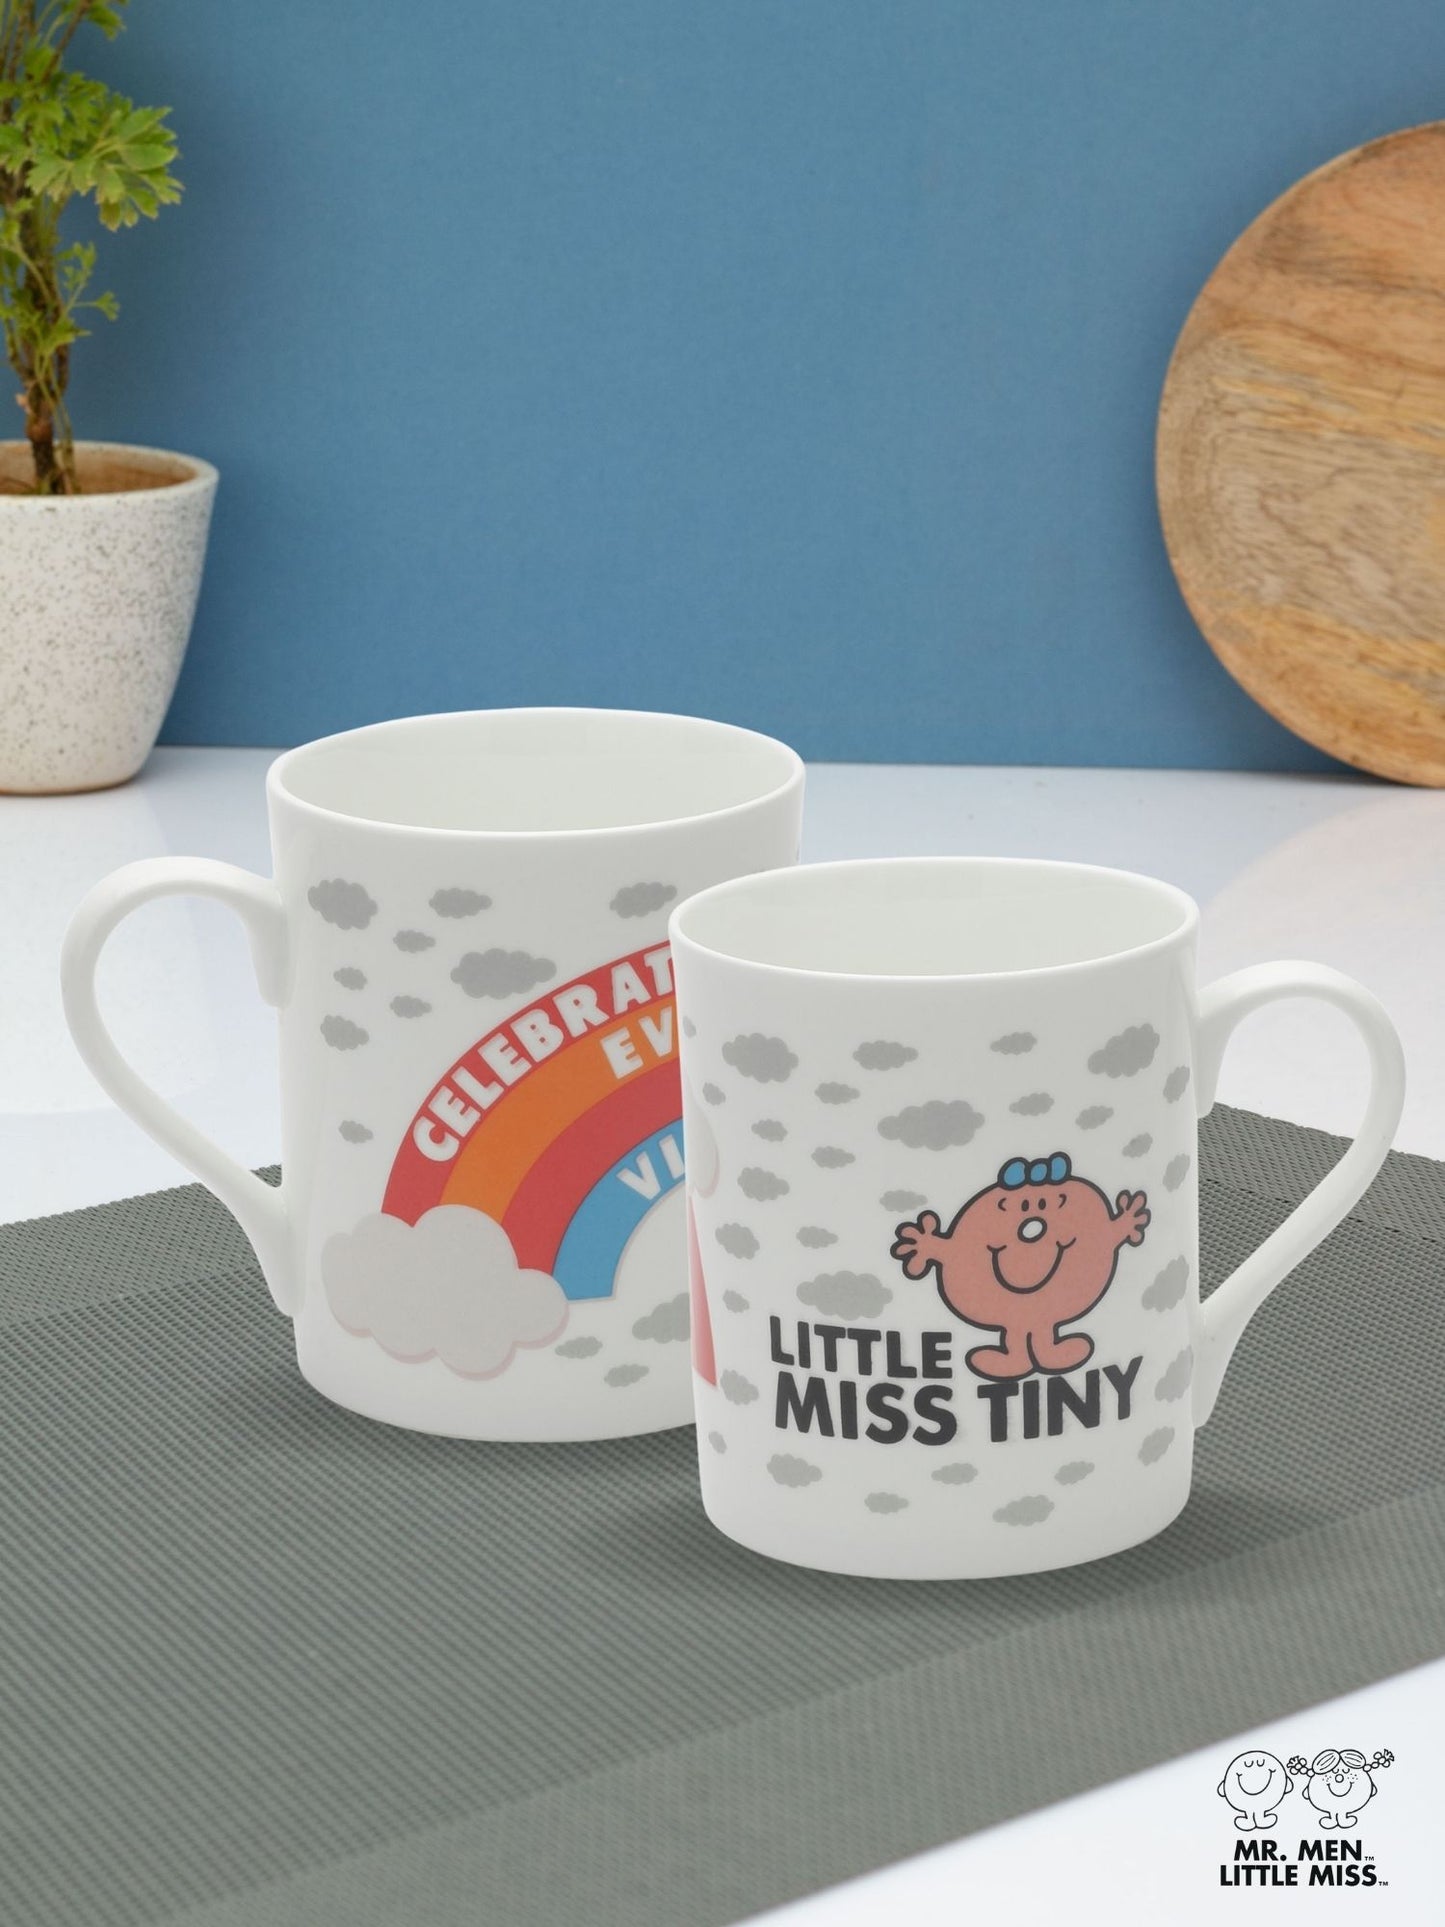 Mr. Men Little Miss™ Swing Coffee & Milk Mug, 350ml, 1 Piece (Little Miss Tinny)